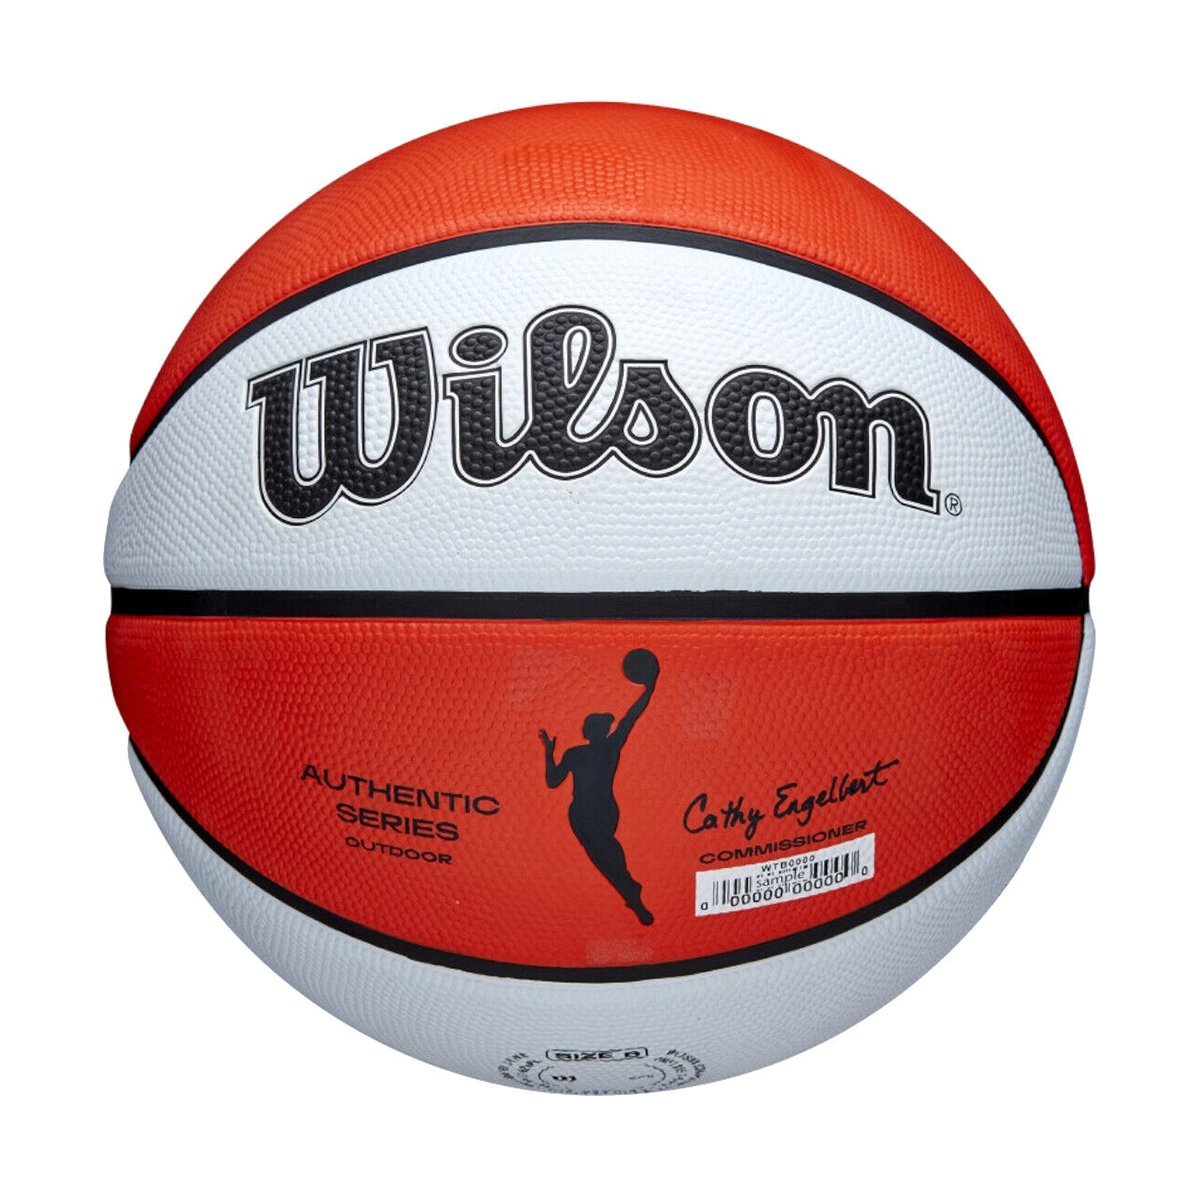 Lopta Wilson WNBA Authentic Series - biela/oranžová